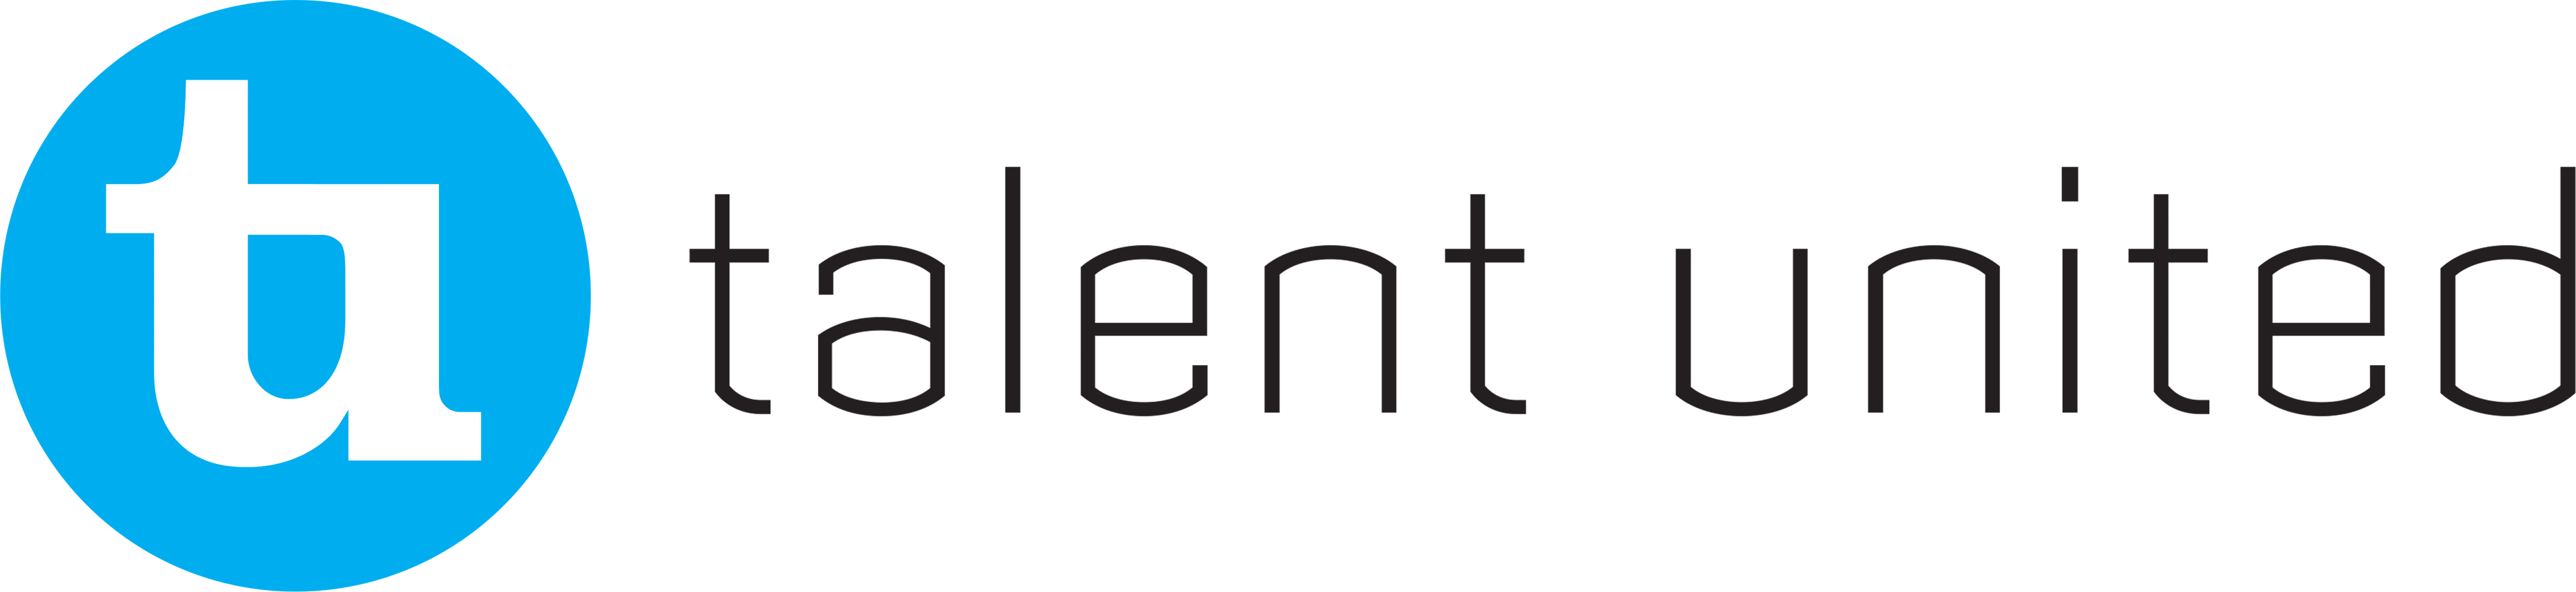 Talent United logo